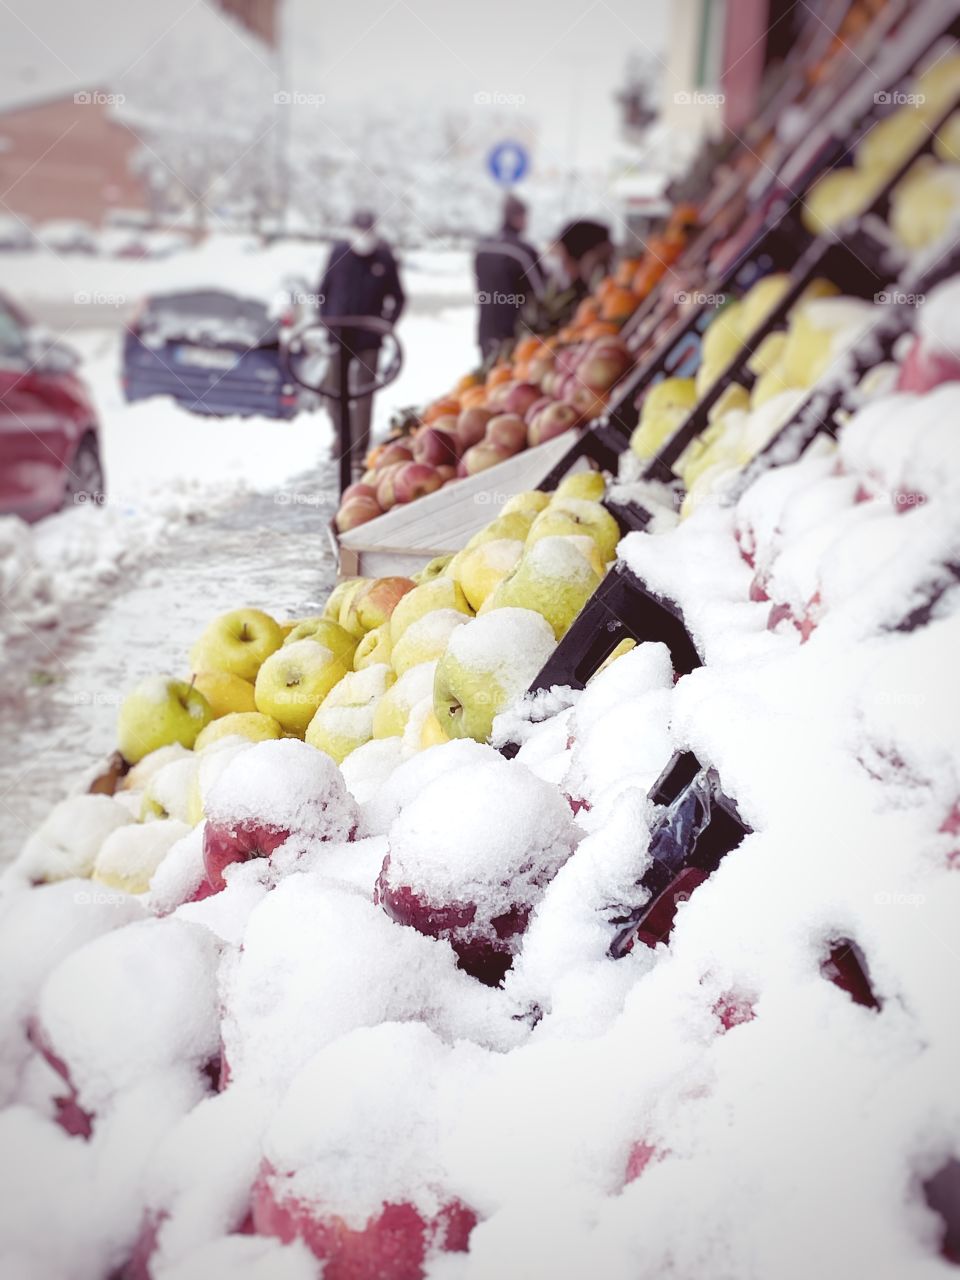 fruit market in December 